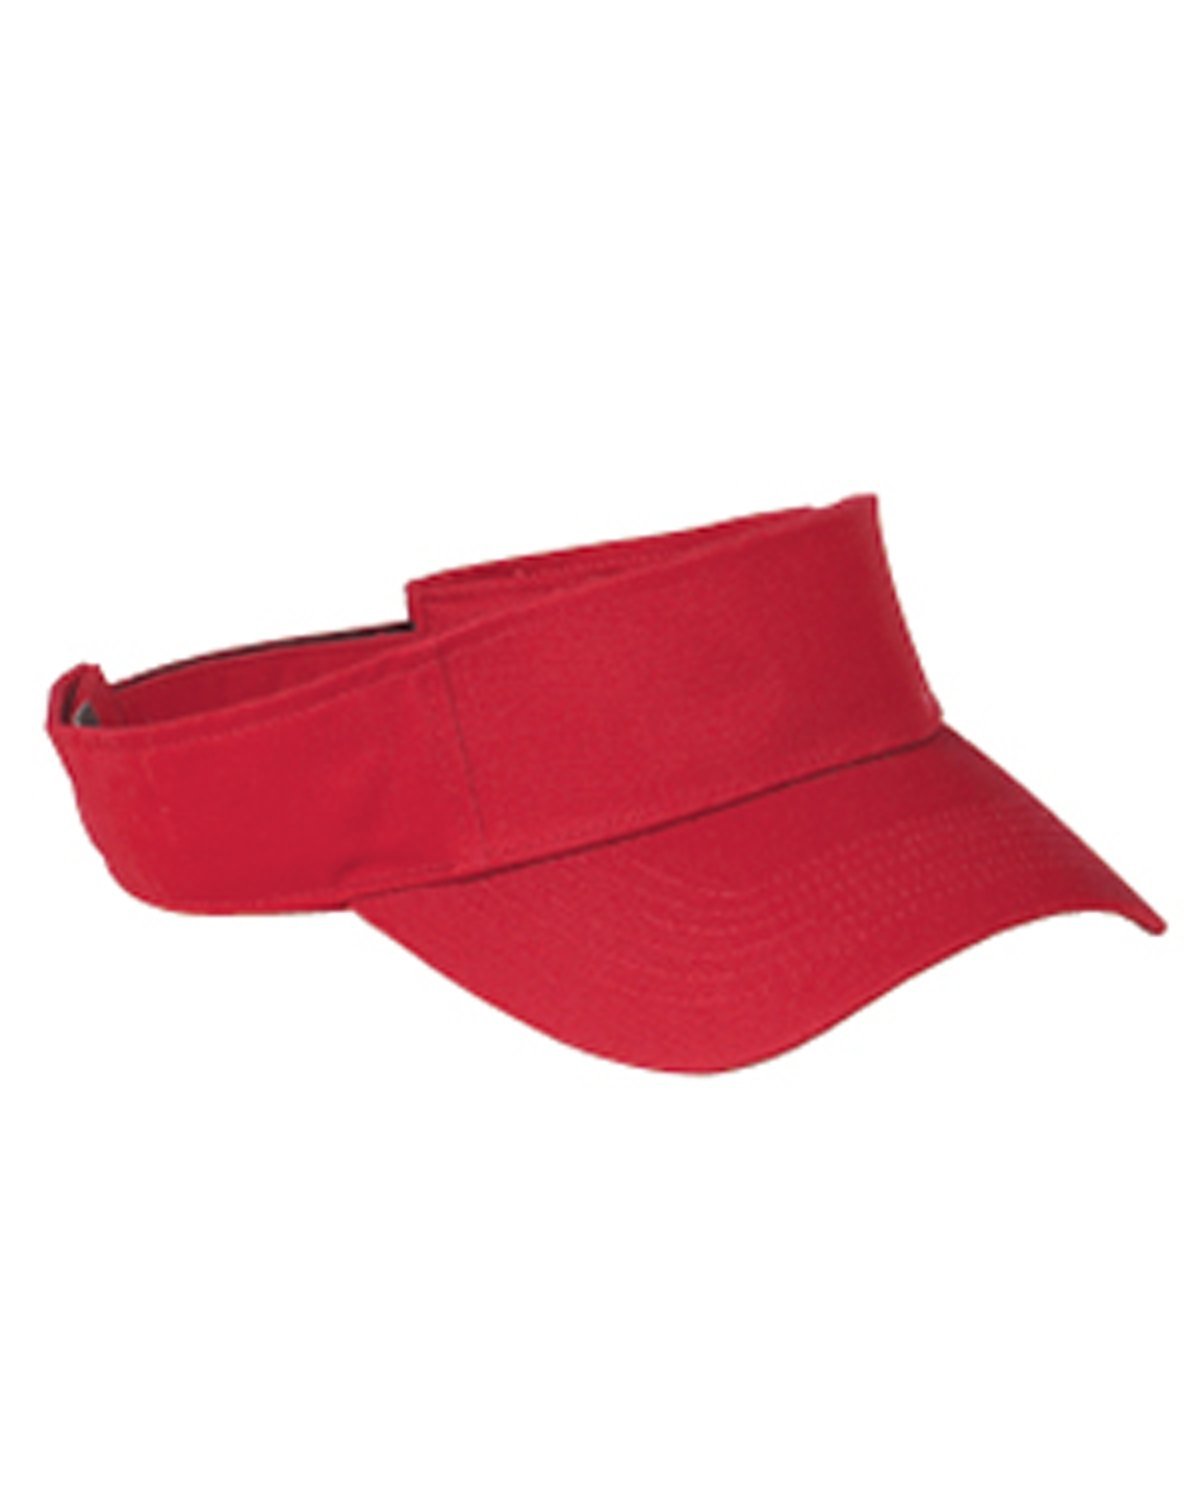 BX006-Big Accessories-RED-Big Accessories-Headwear-1